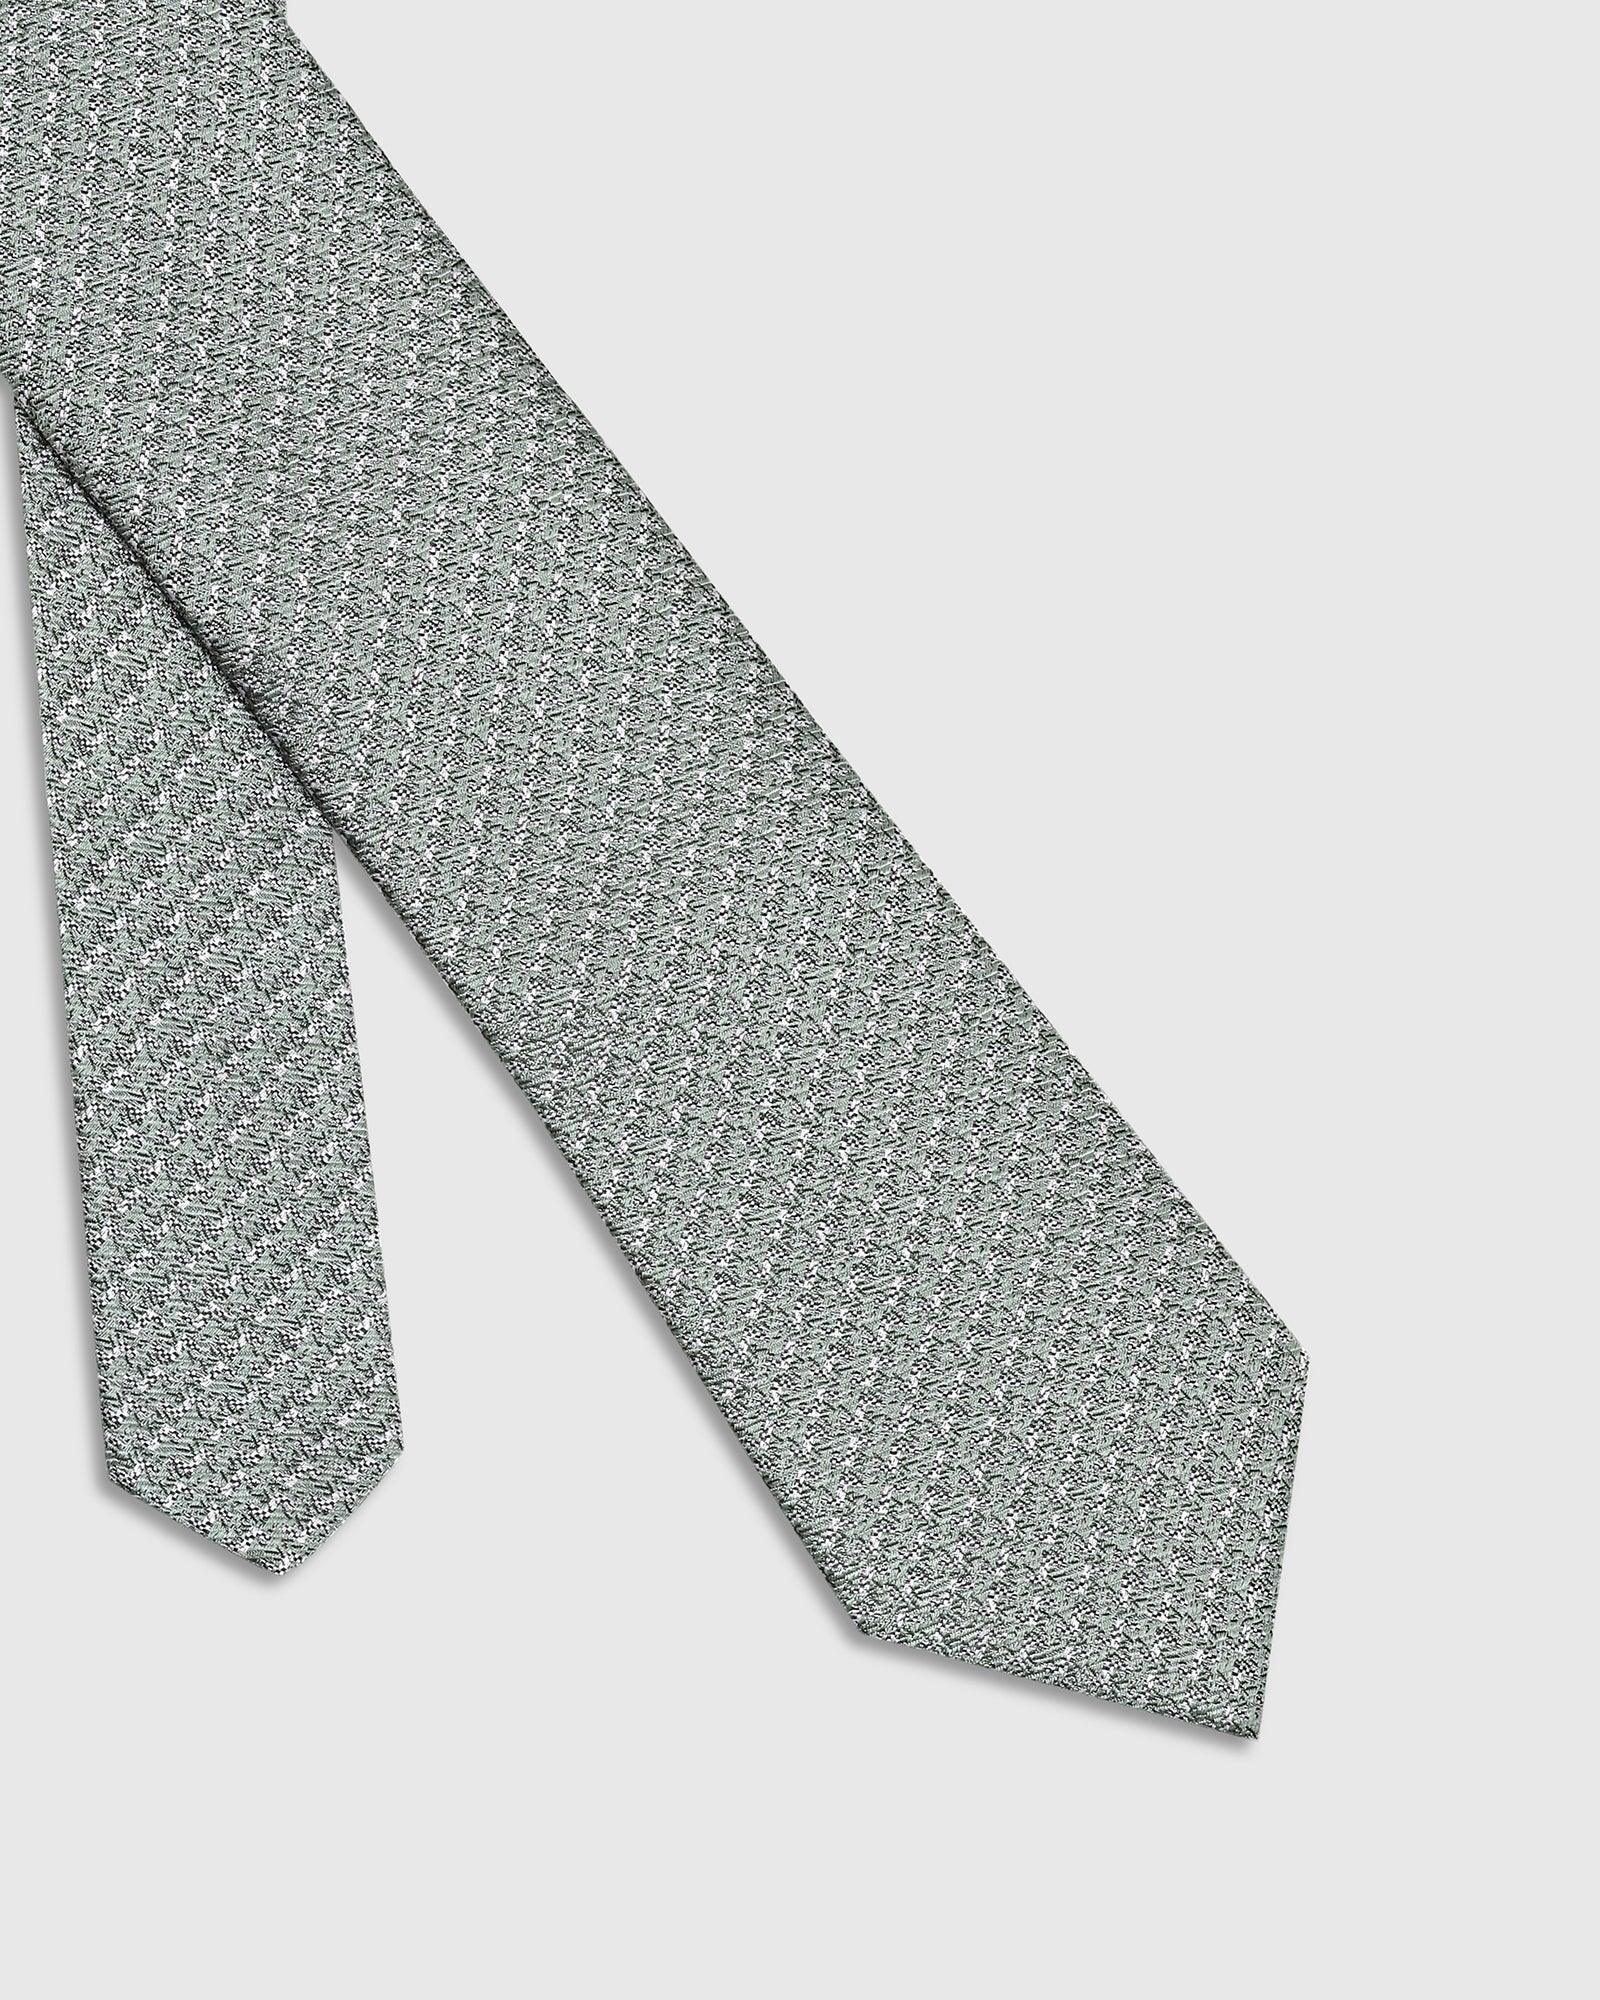 Printed Tie In Green (Twinkle) - Blackberrys